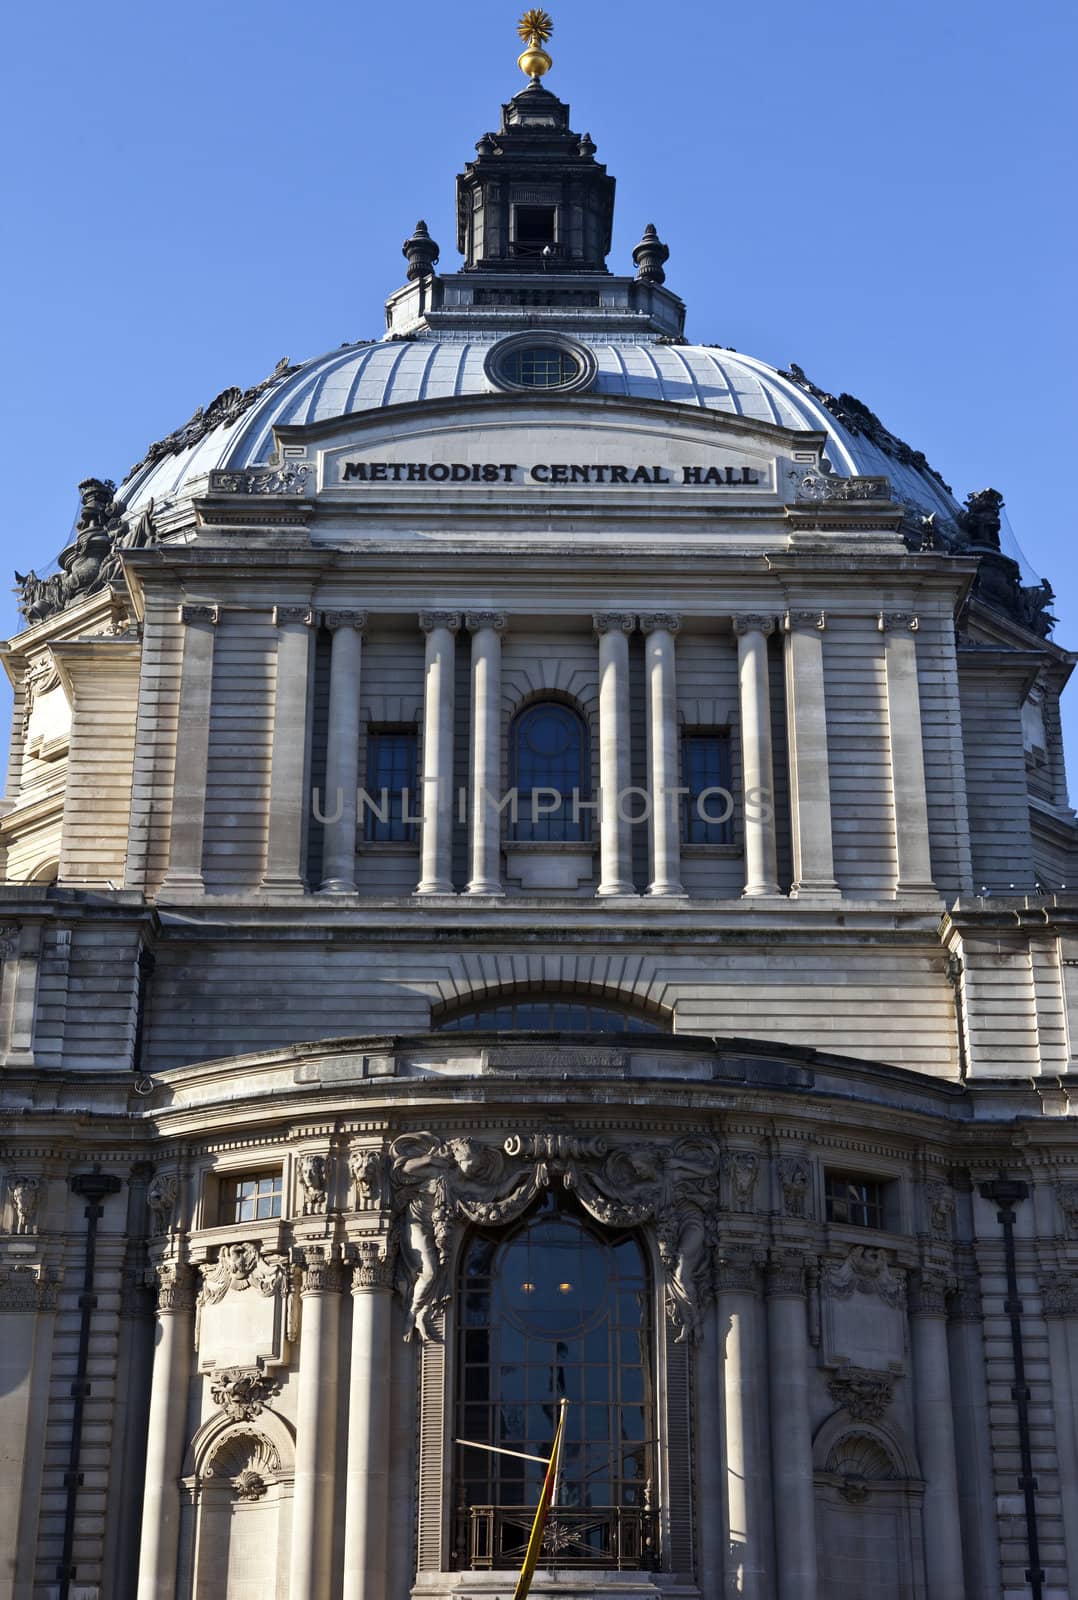 Westminster Central Hall by chrisdorney